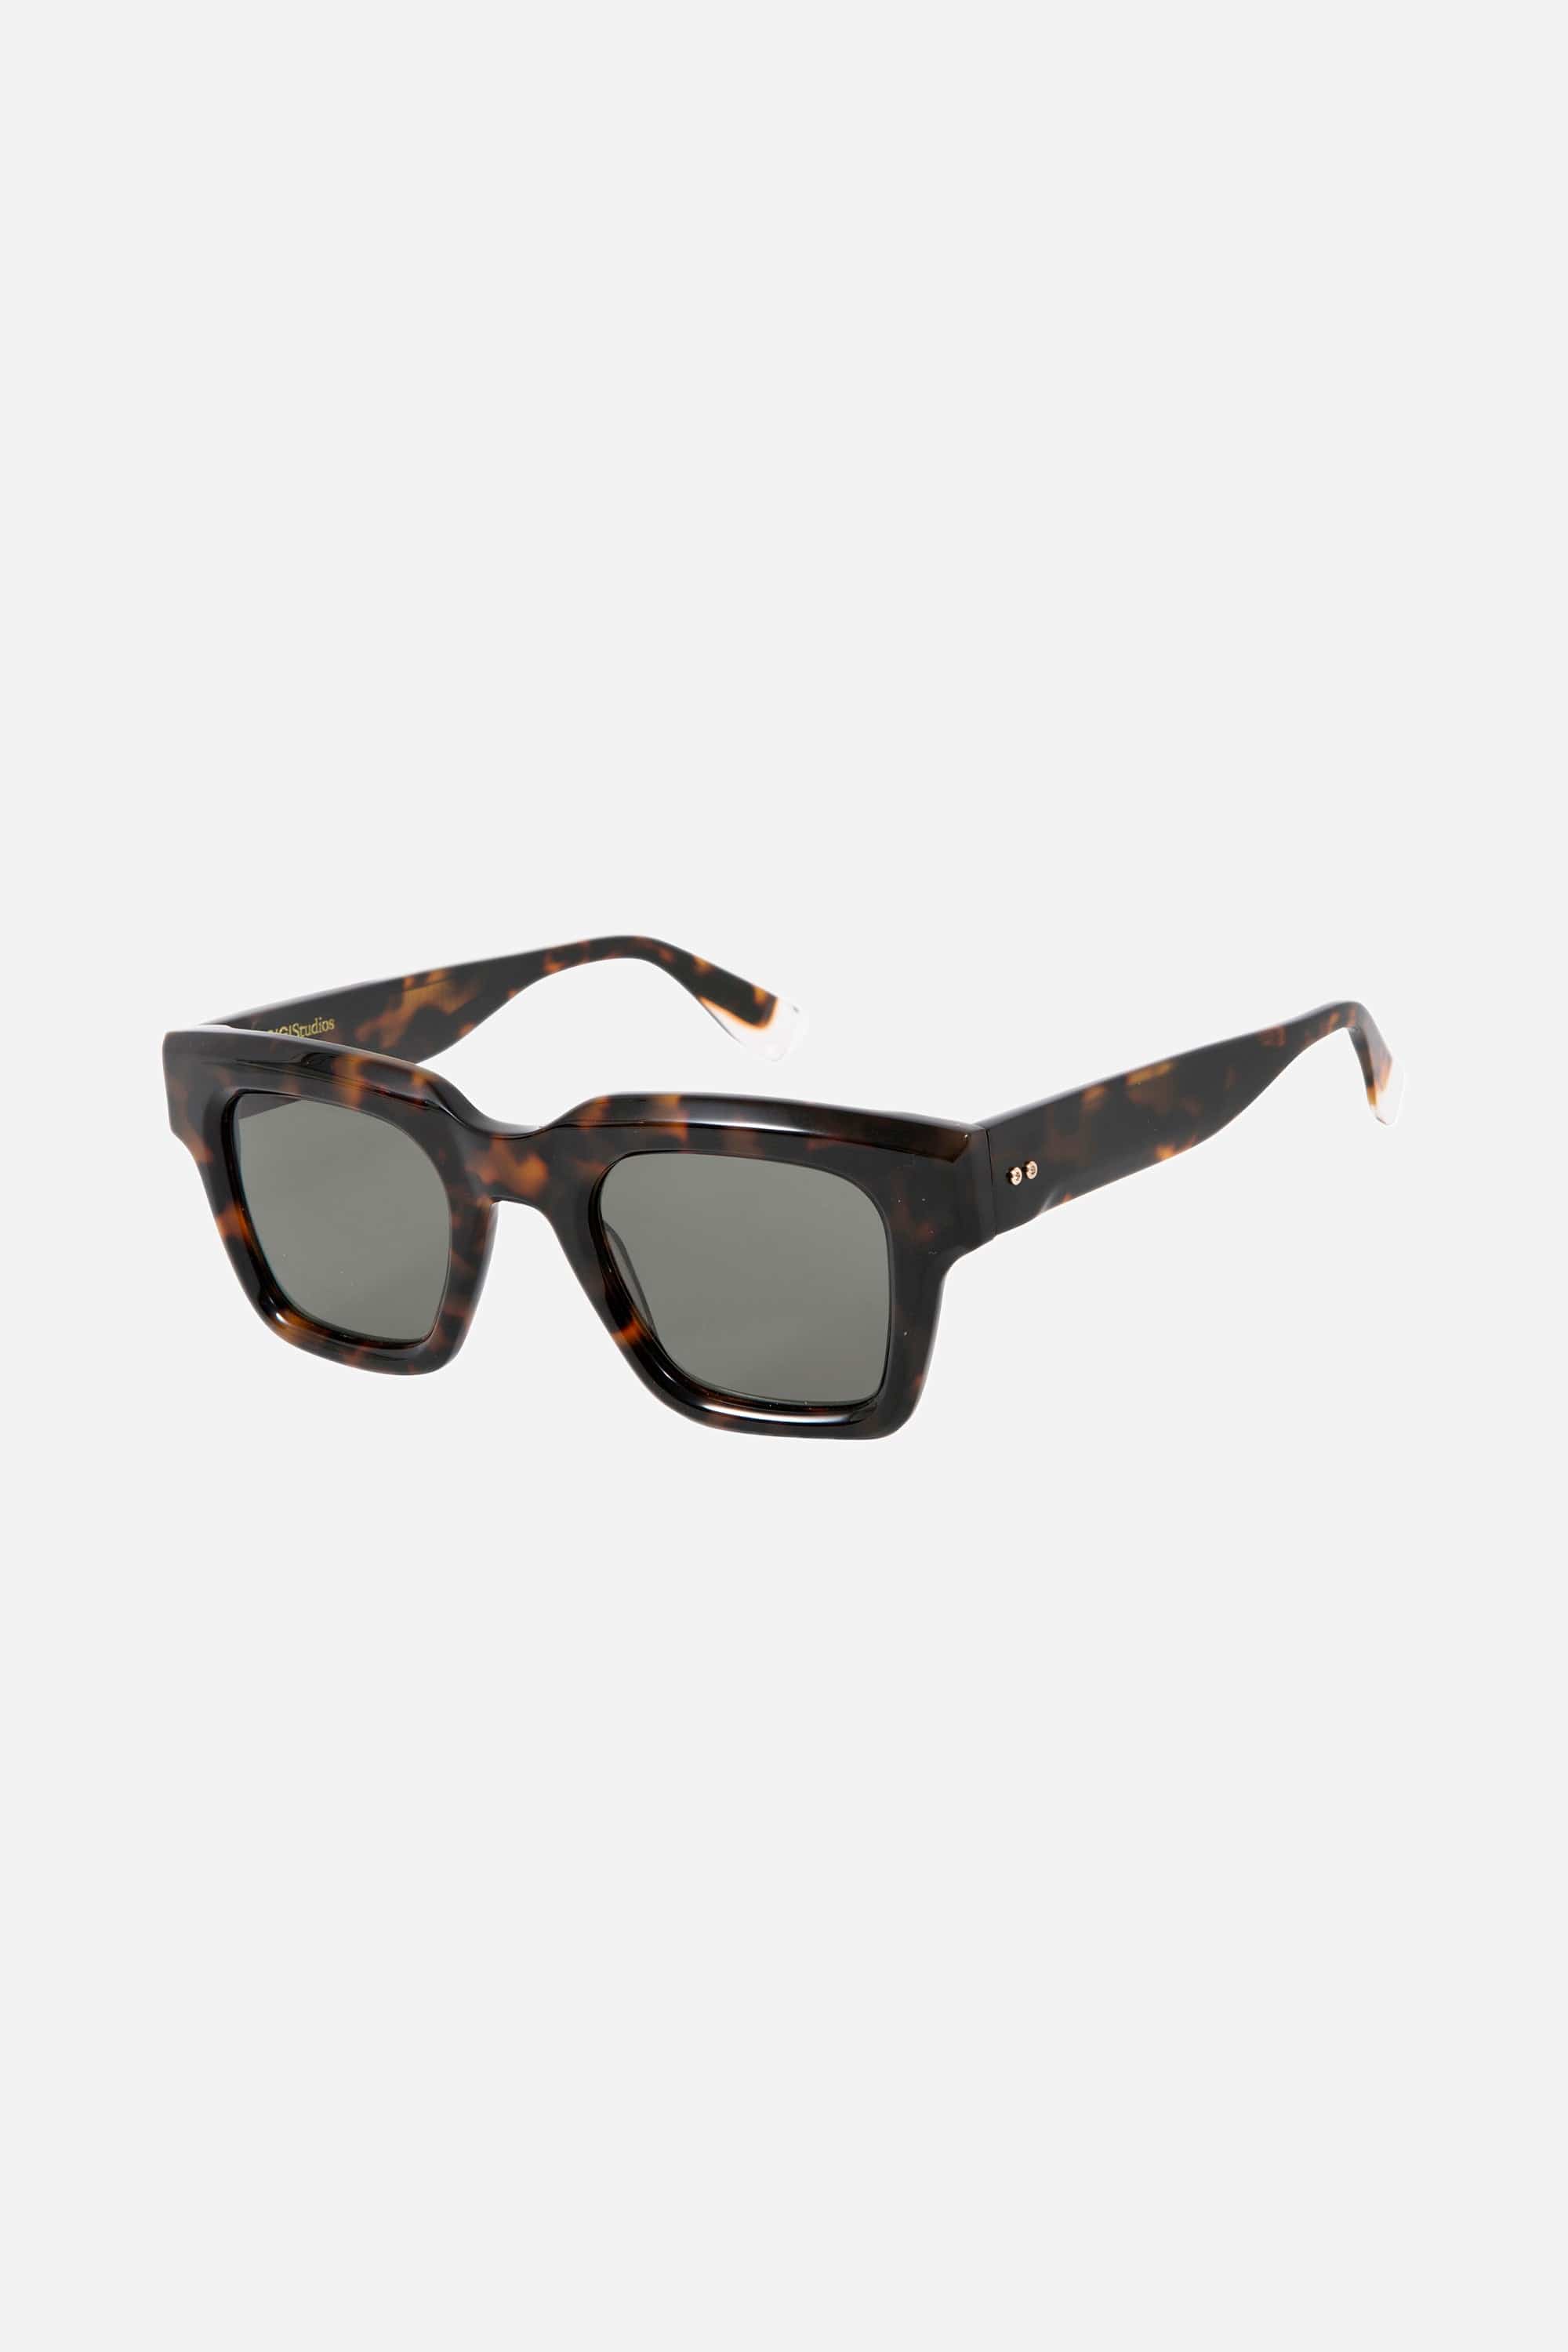 Gigi Studios squared havana and brown sunglasses - Eyewear Club